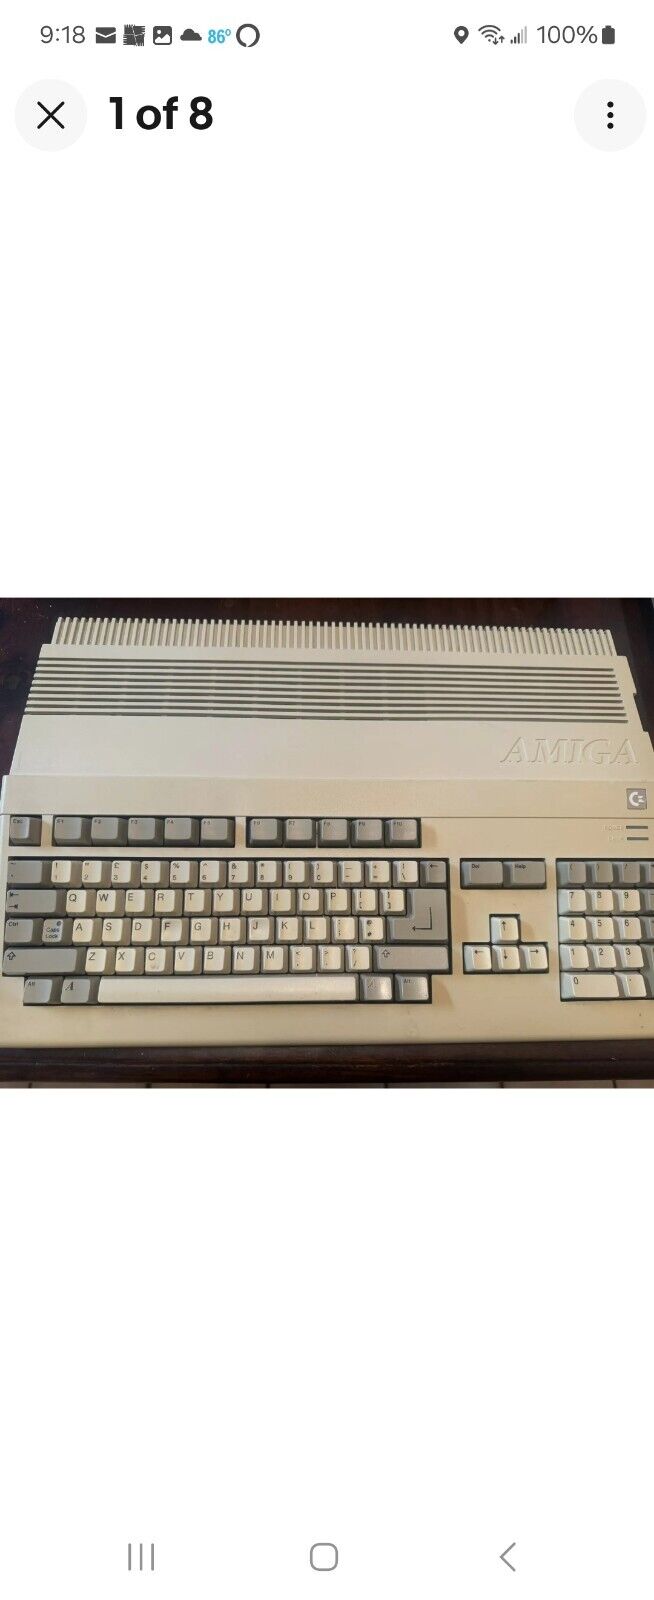   Commodore Amiga 500 Working 